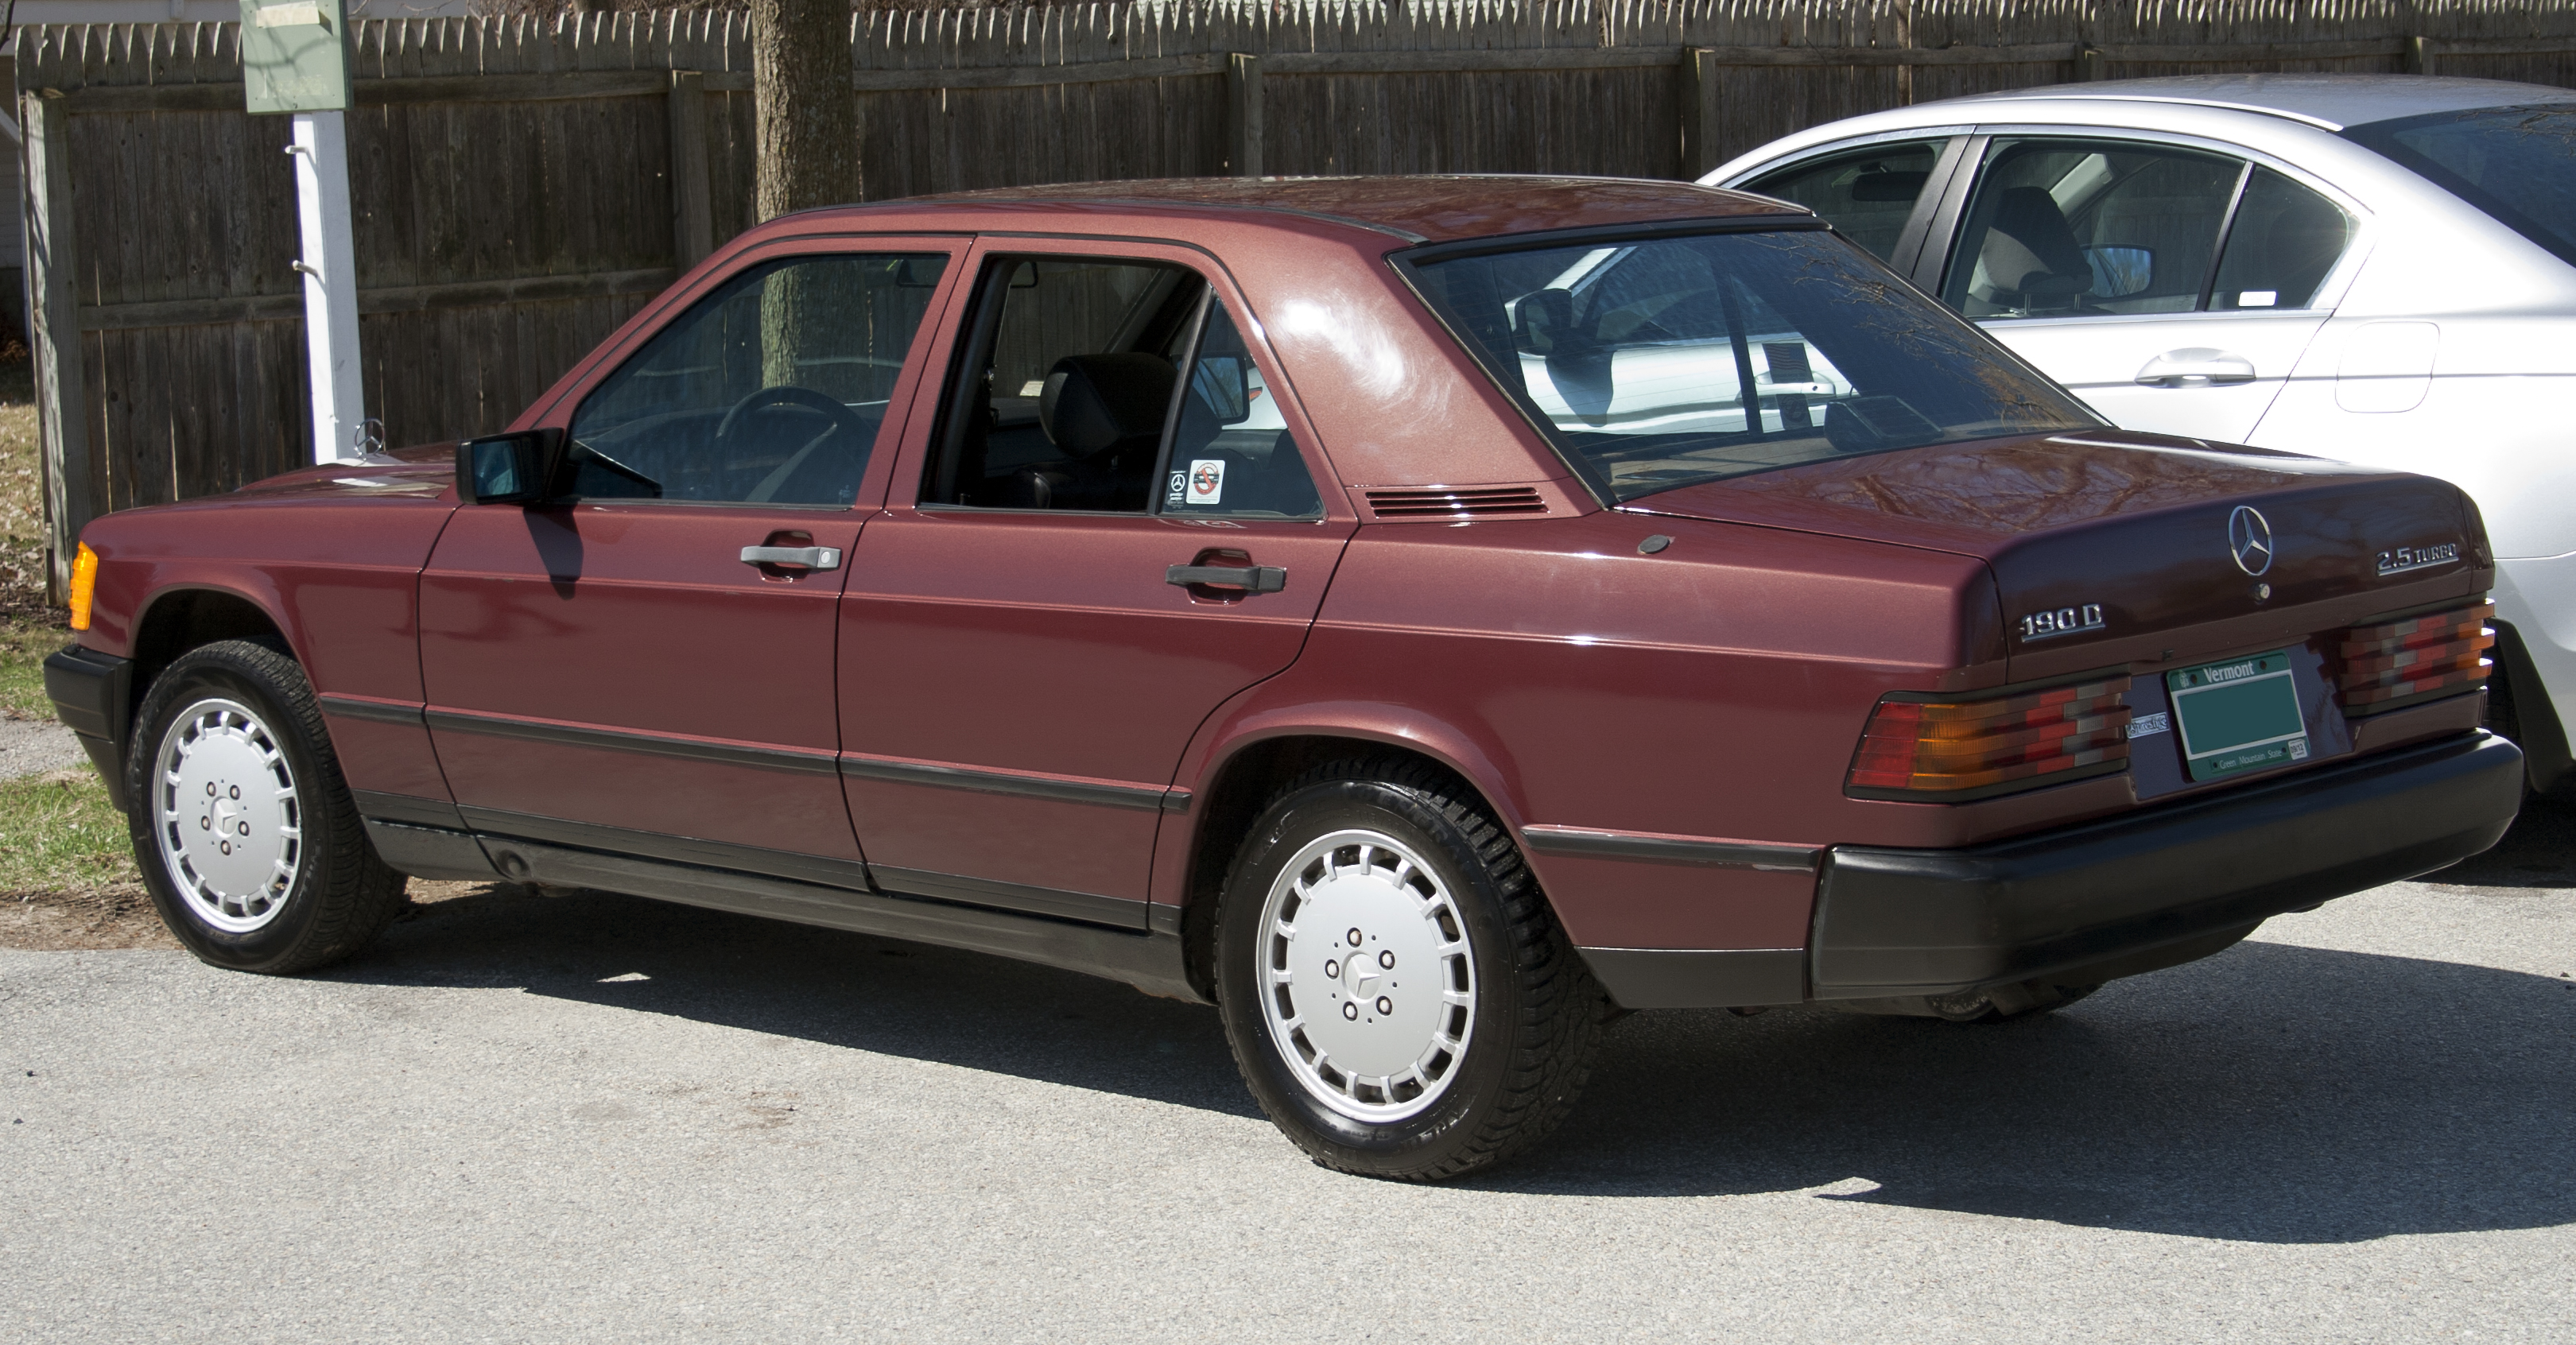 File:Mercedes Benz 190 D 2.5 1987 (14390741551).jpg - Wikipedia